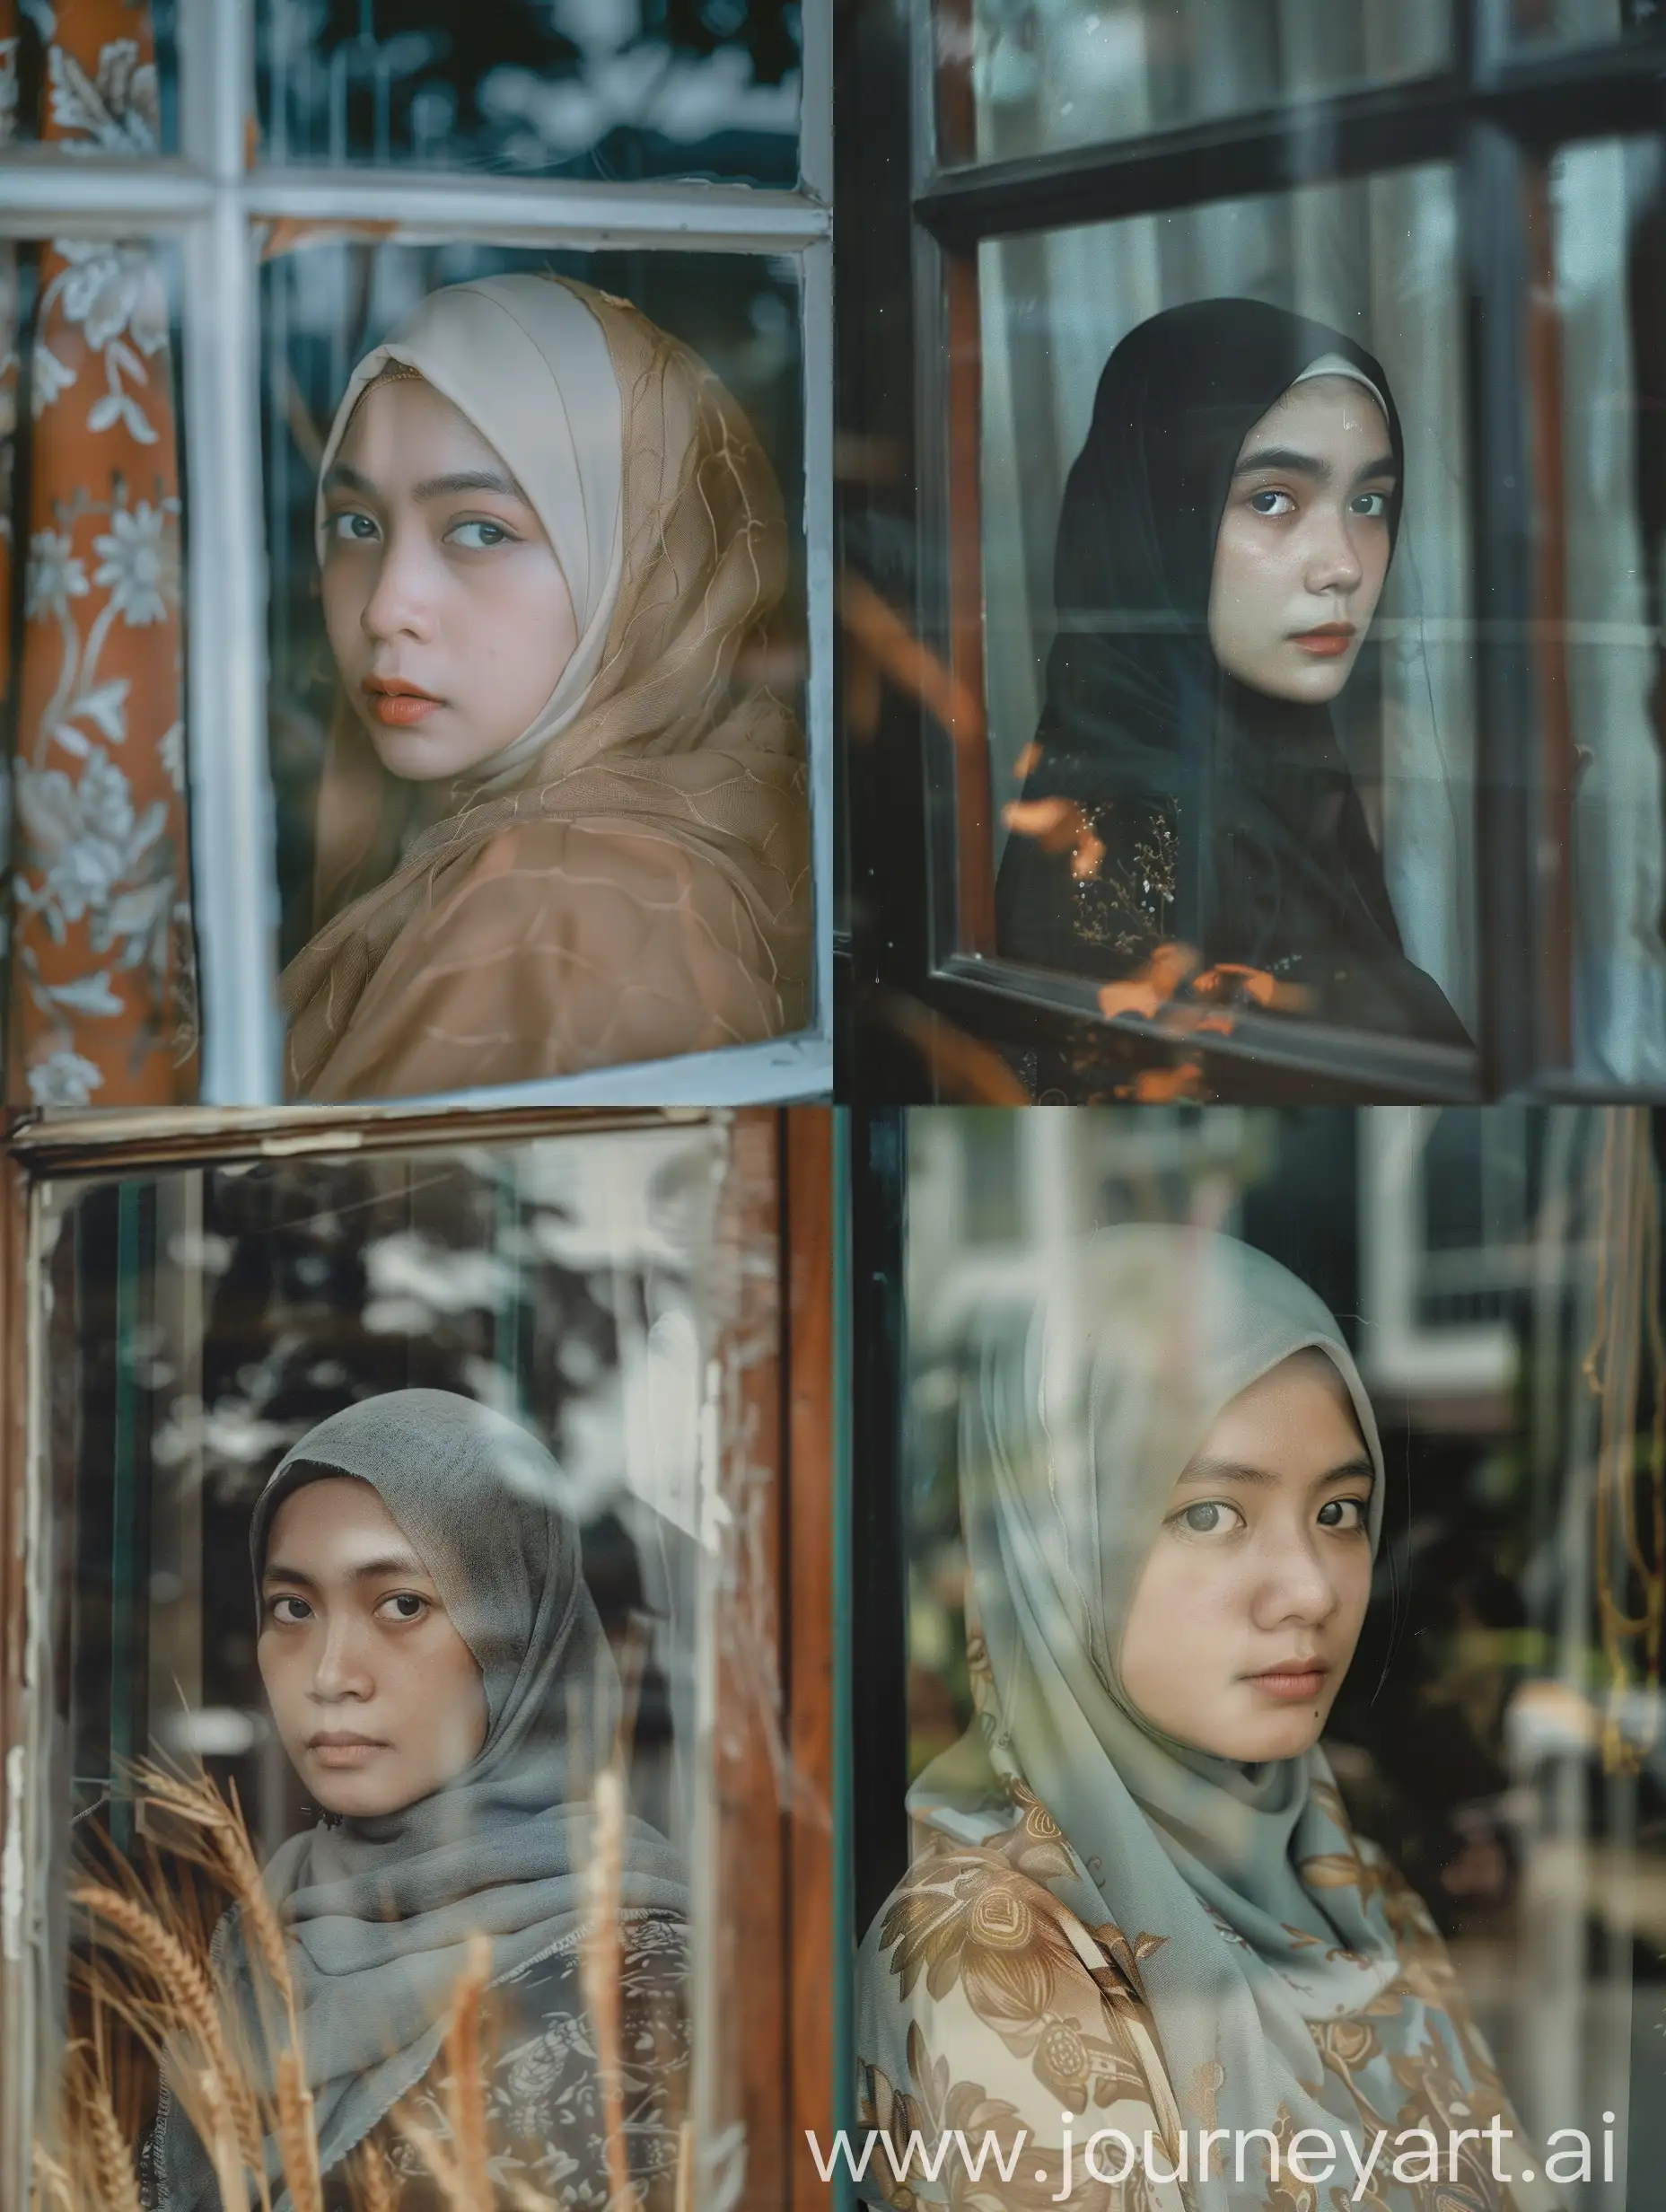 Contemplative-Indonesian-Hijab-Woman-Gazing-through-Reflective-Window